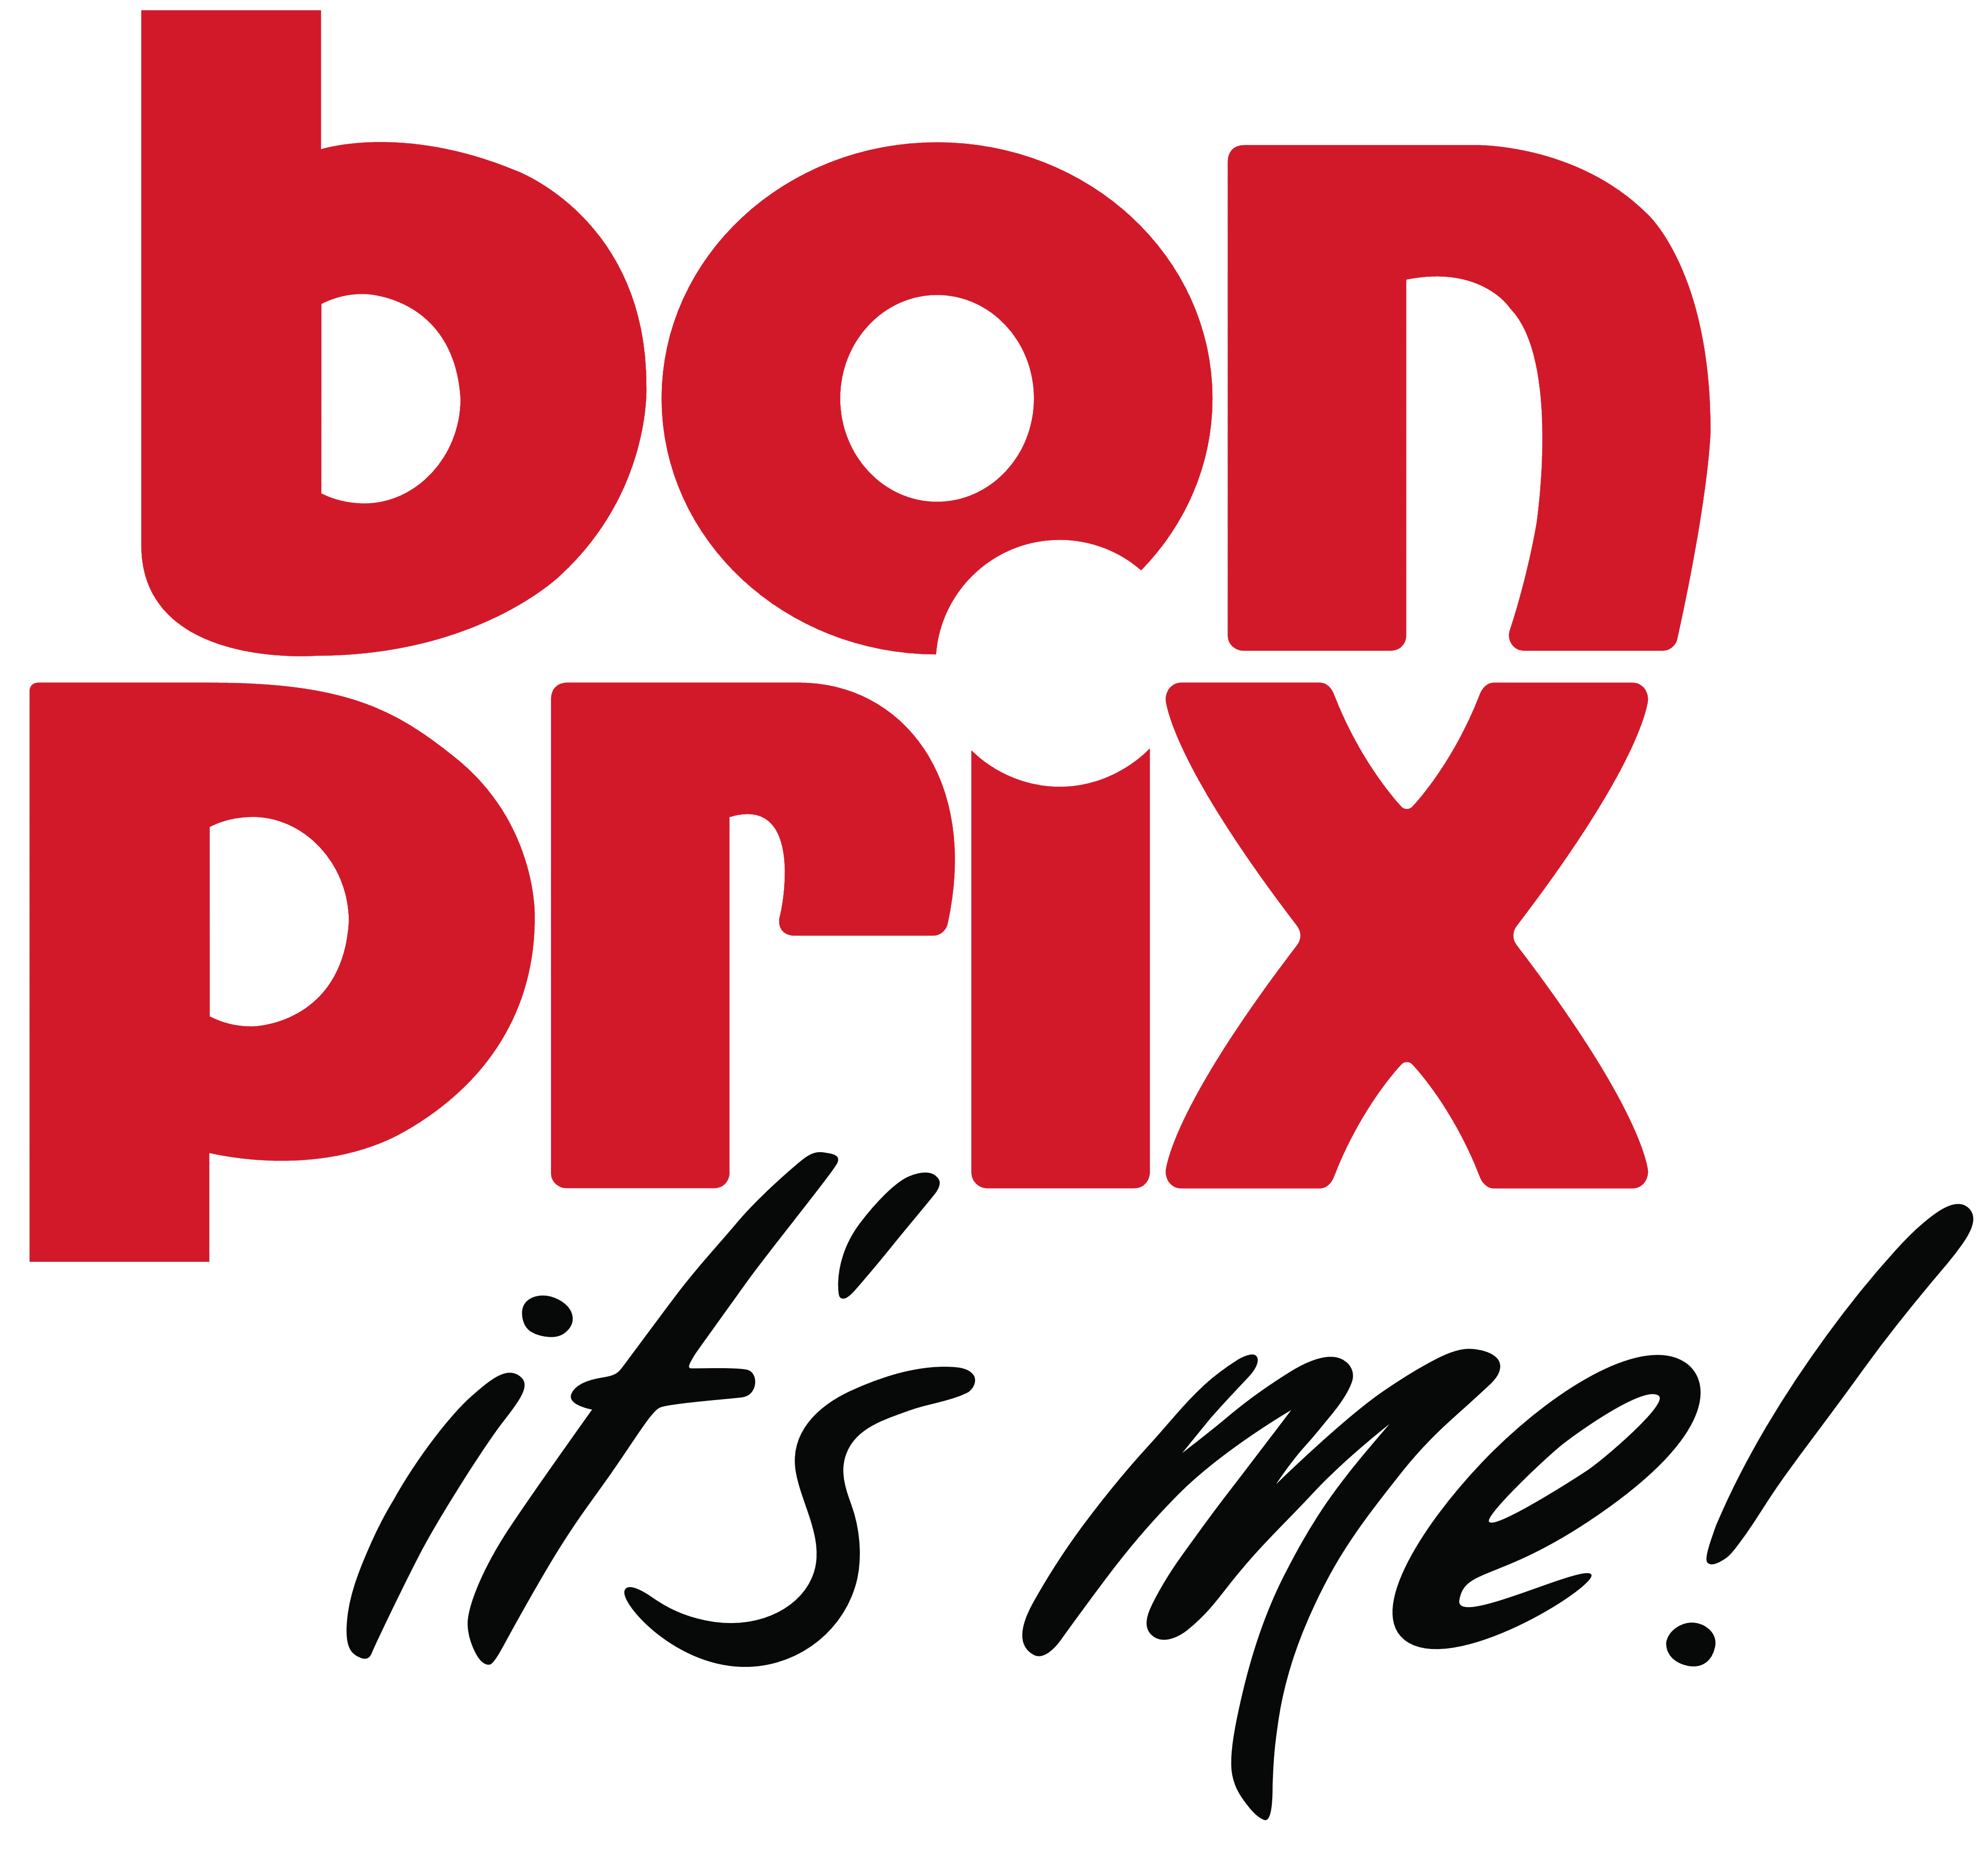 BonPrix logo, logotype